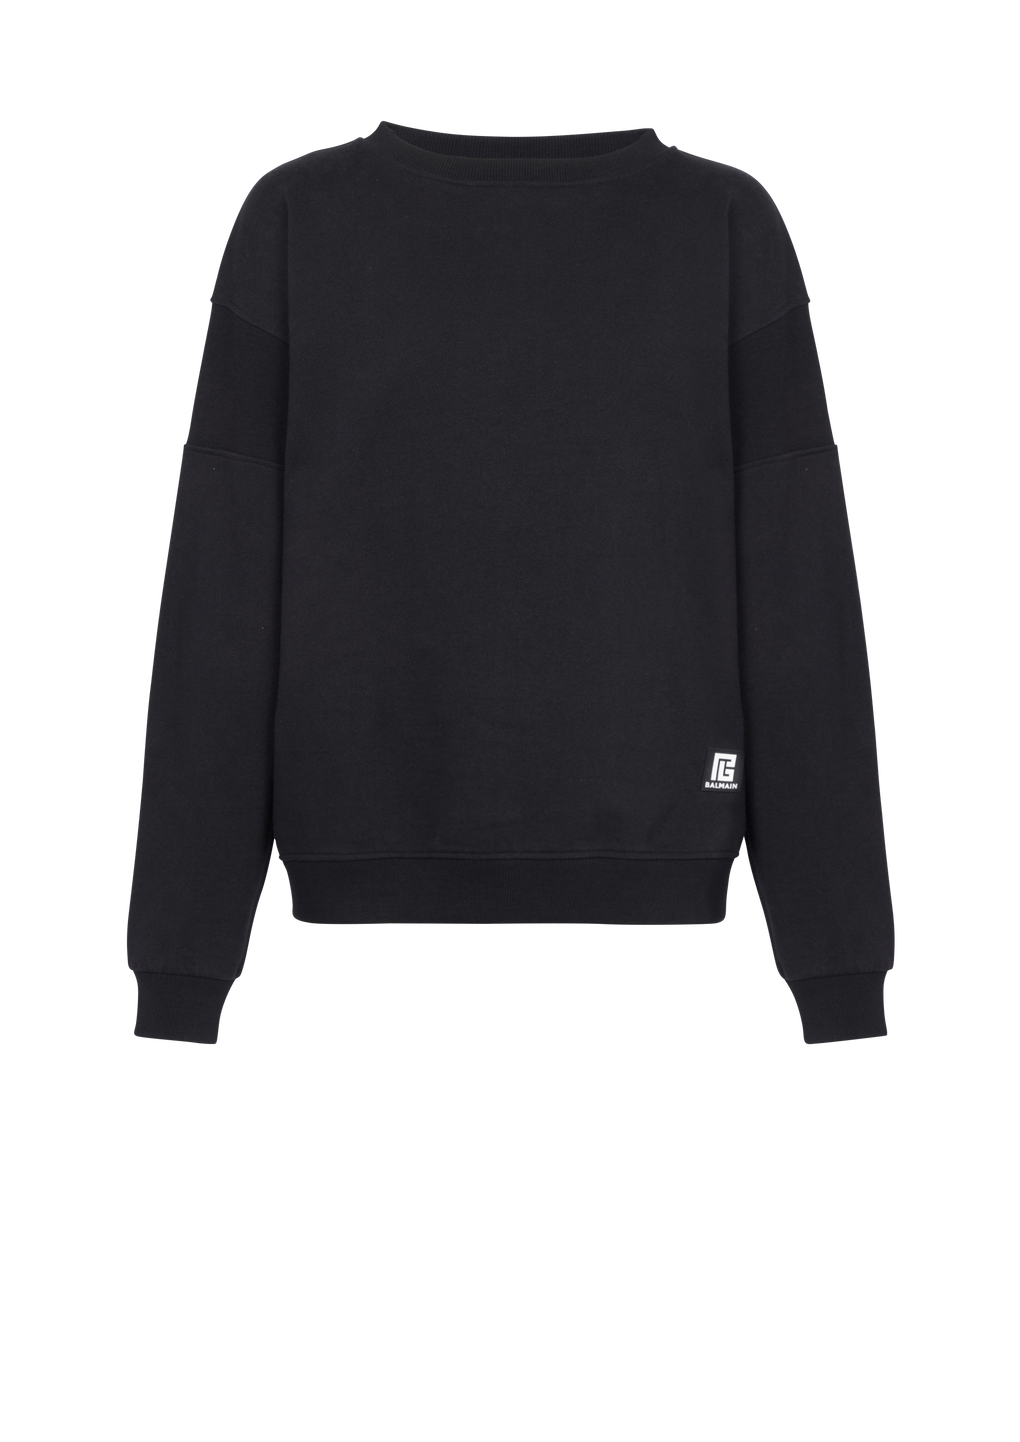 Eco-designed cotton sweatshirt with Balmain logo print, black, hi-res